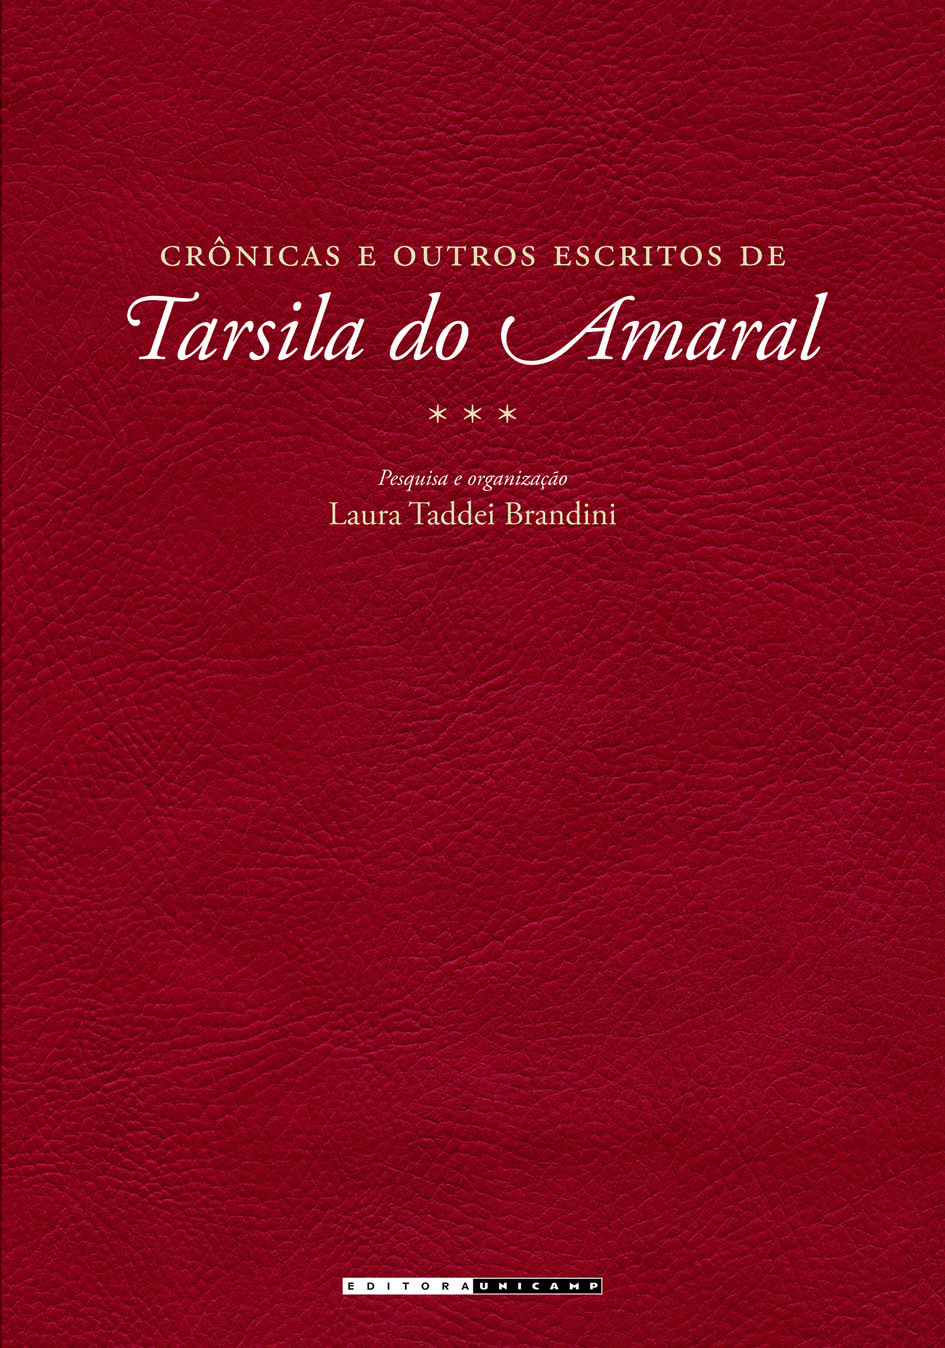 Crônicas e outros escritos de Tarsila do Amaral, livro de Laura Taddei Brandini (Org.)